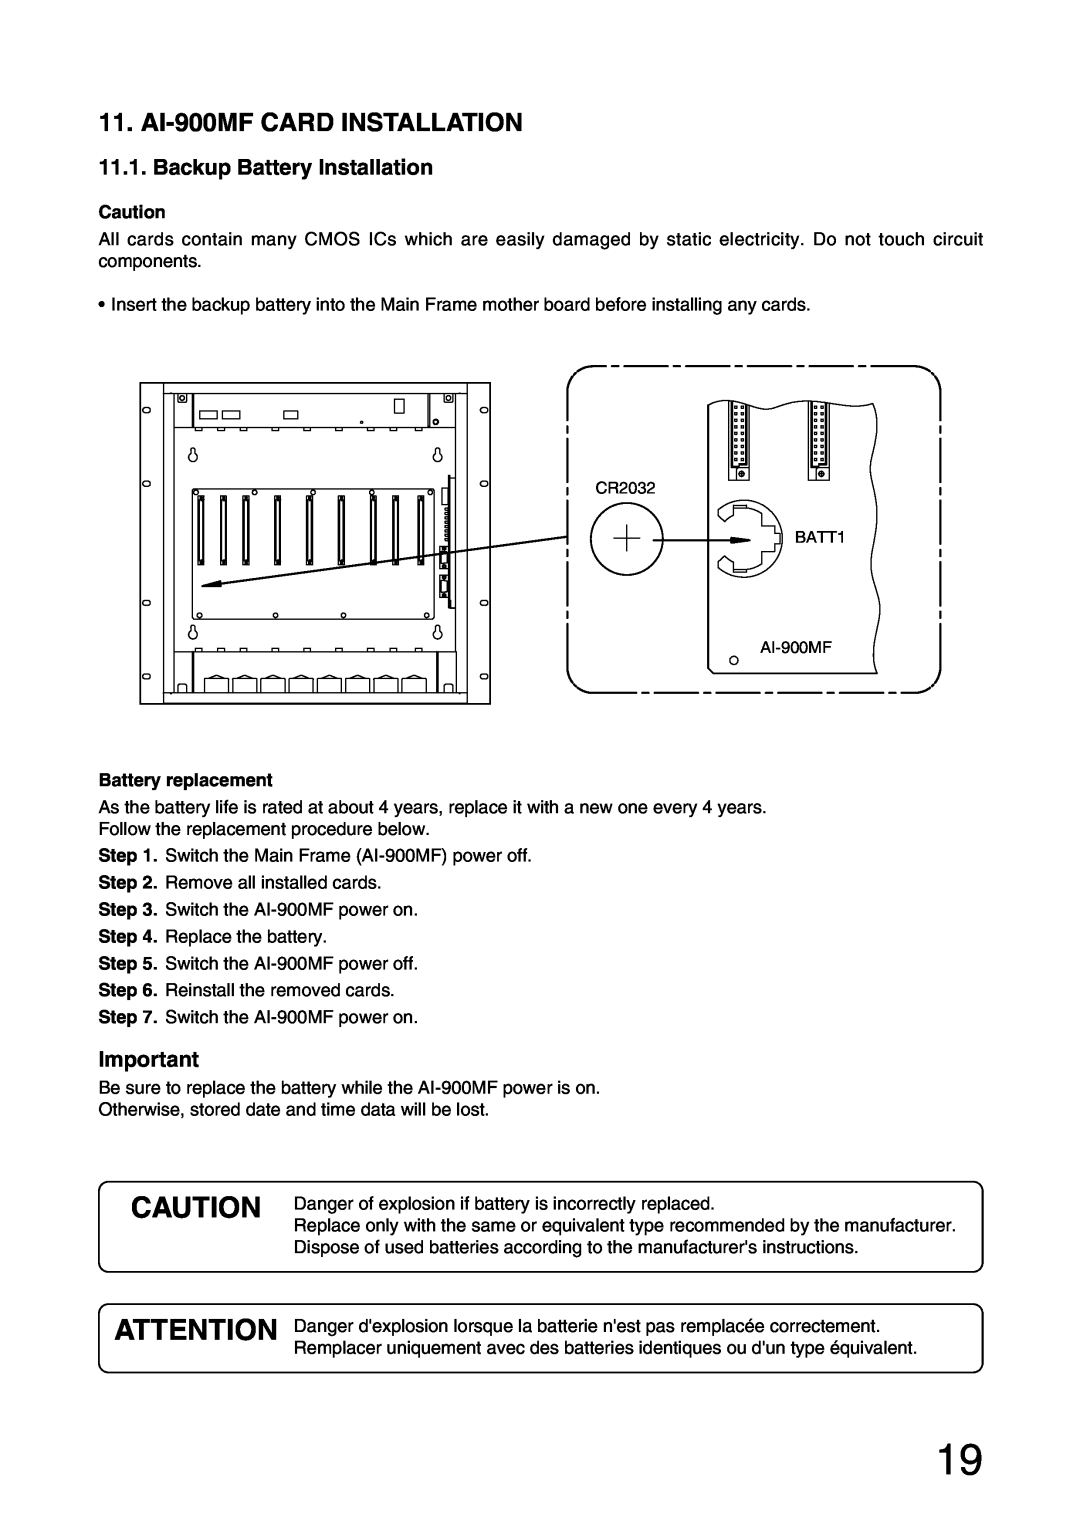 Aiphone installation manual AI-900MFCARD INSTALLATION, Backup Battery Installation, Battery replacement 